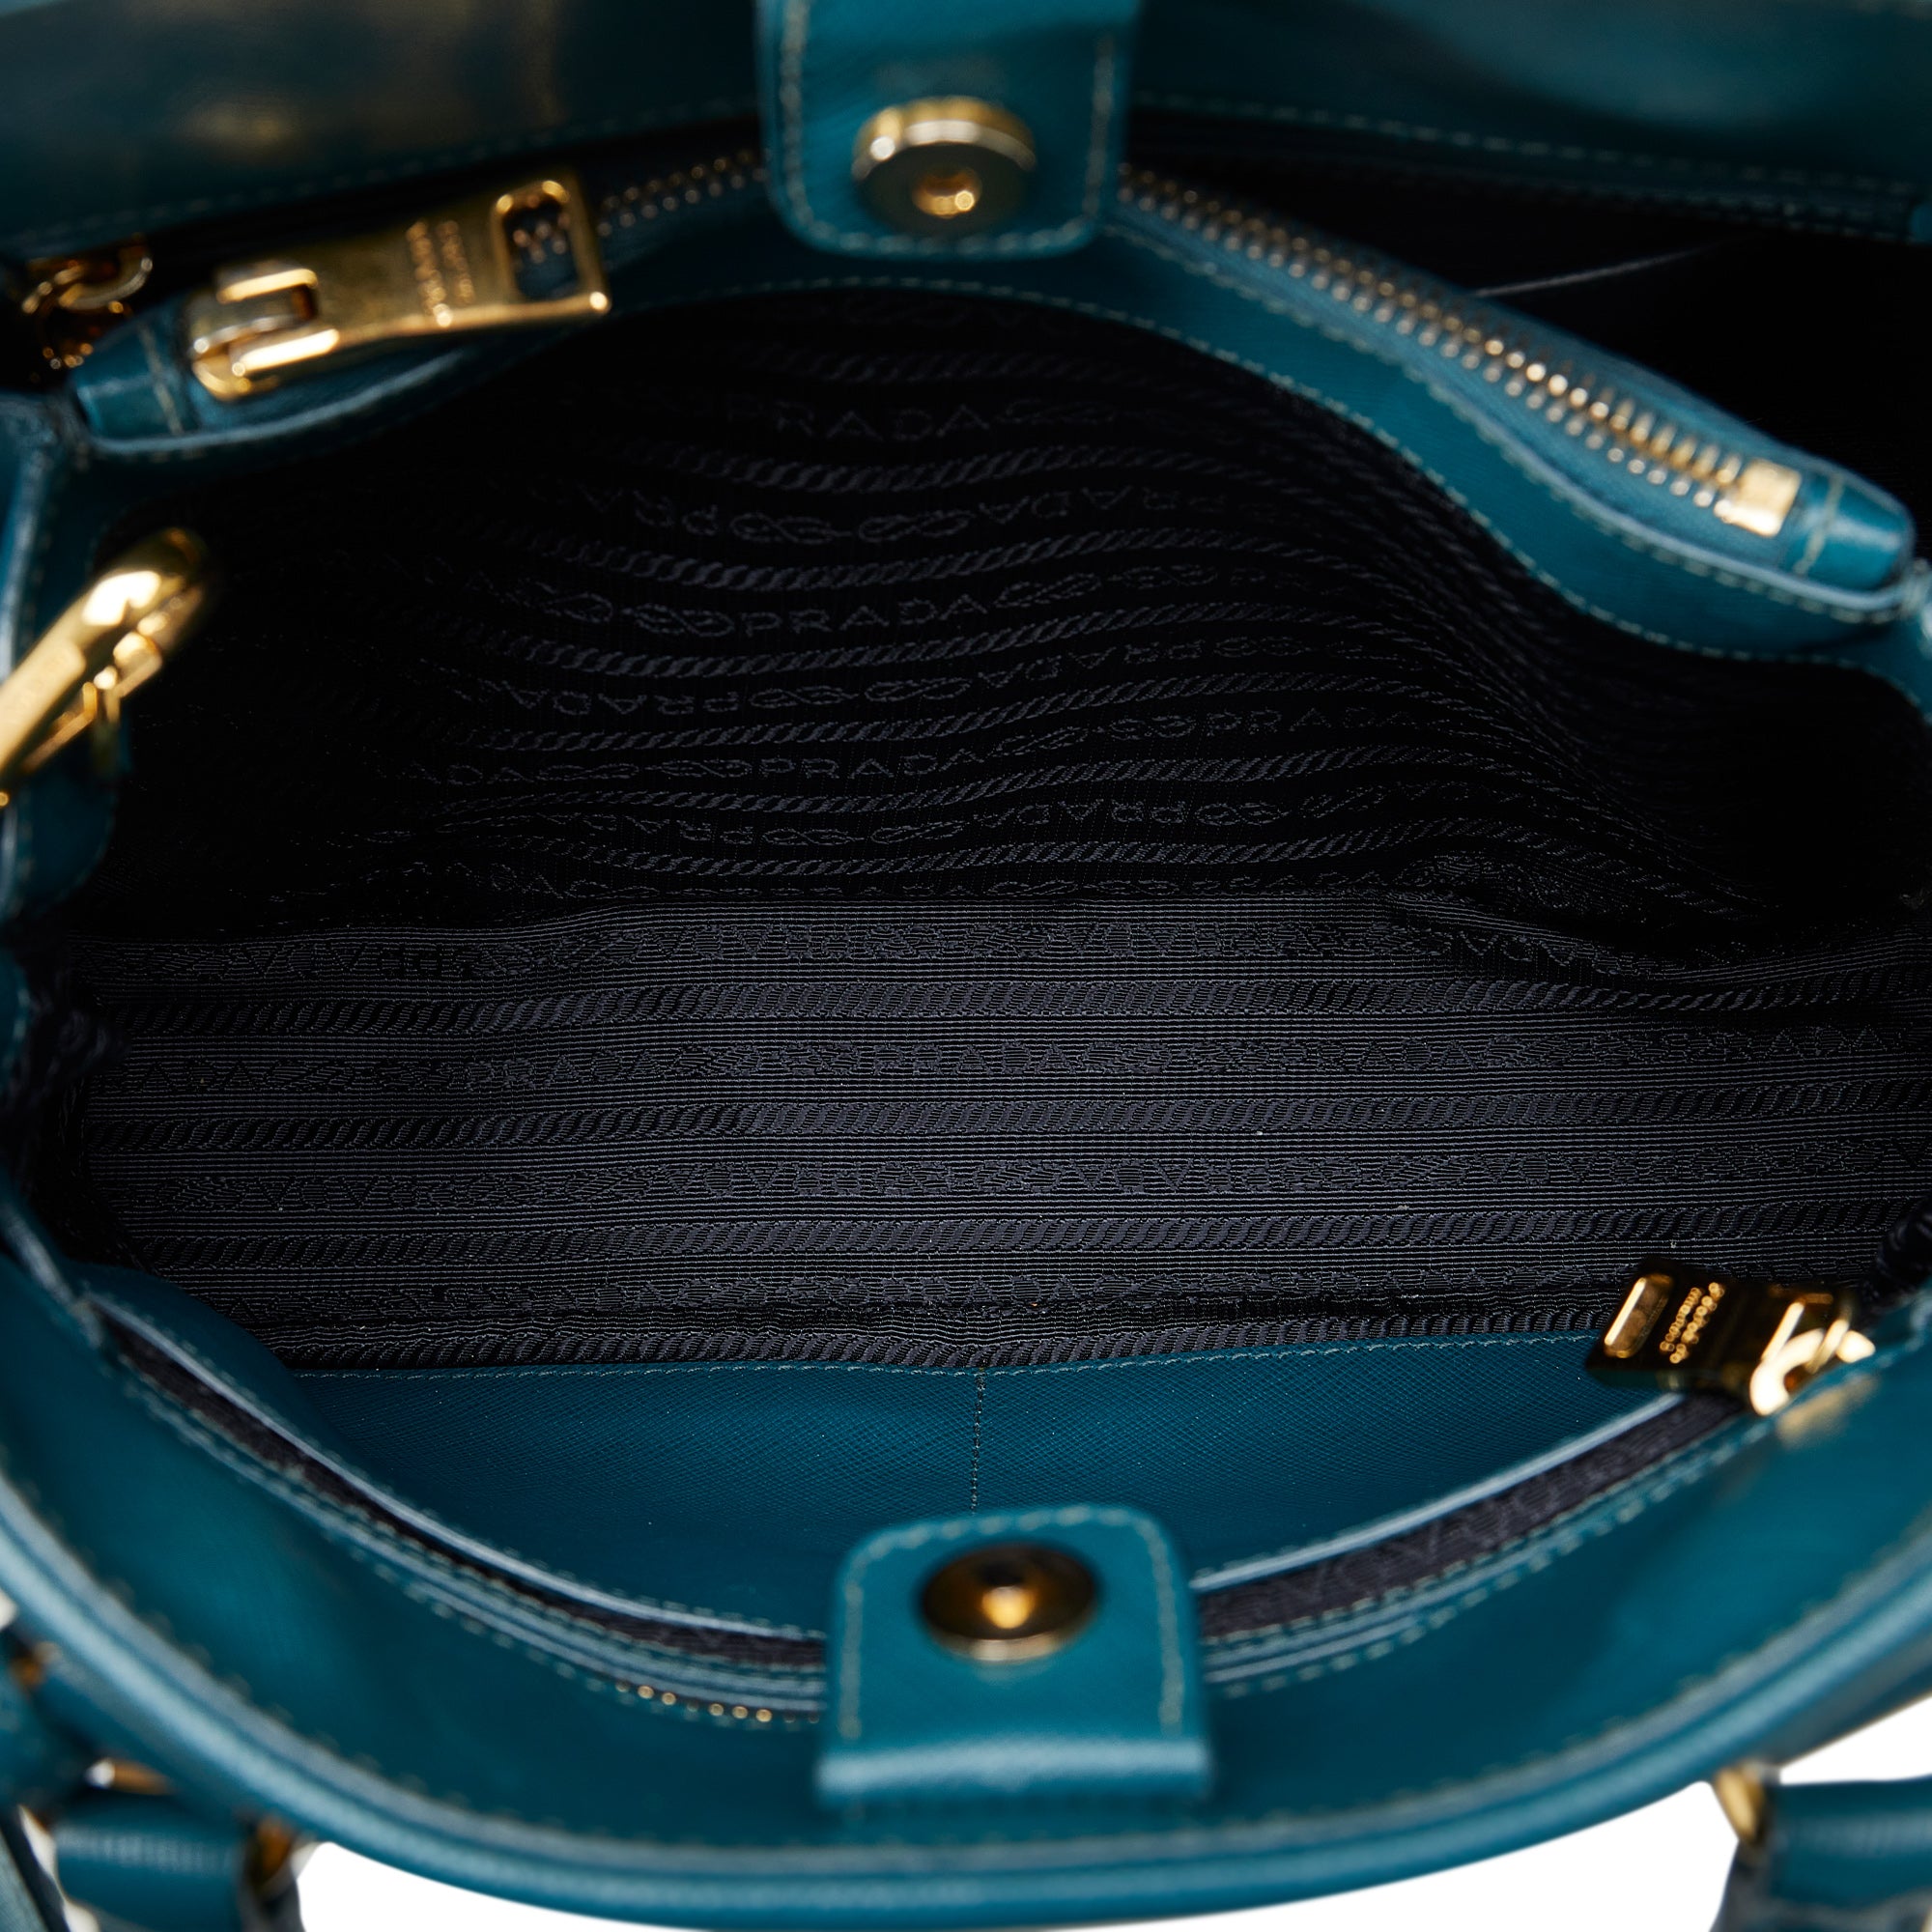 Prada Vintage - Saffiano Leather Lux Promenade Satchel Bag - Blue